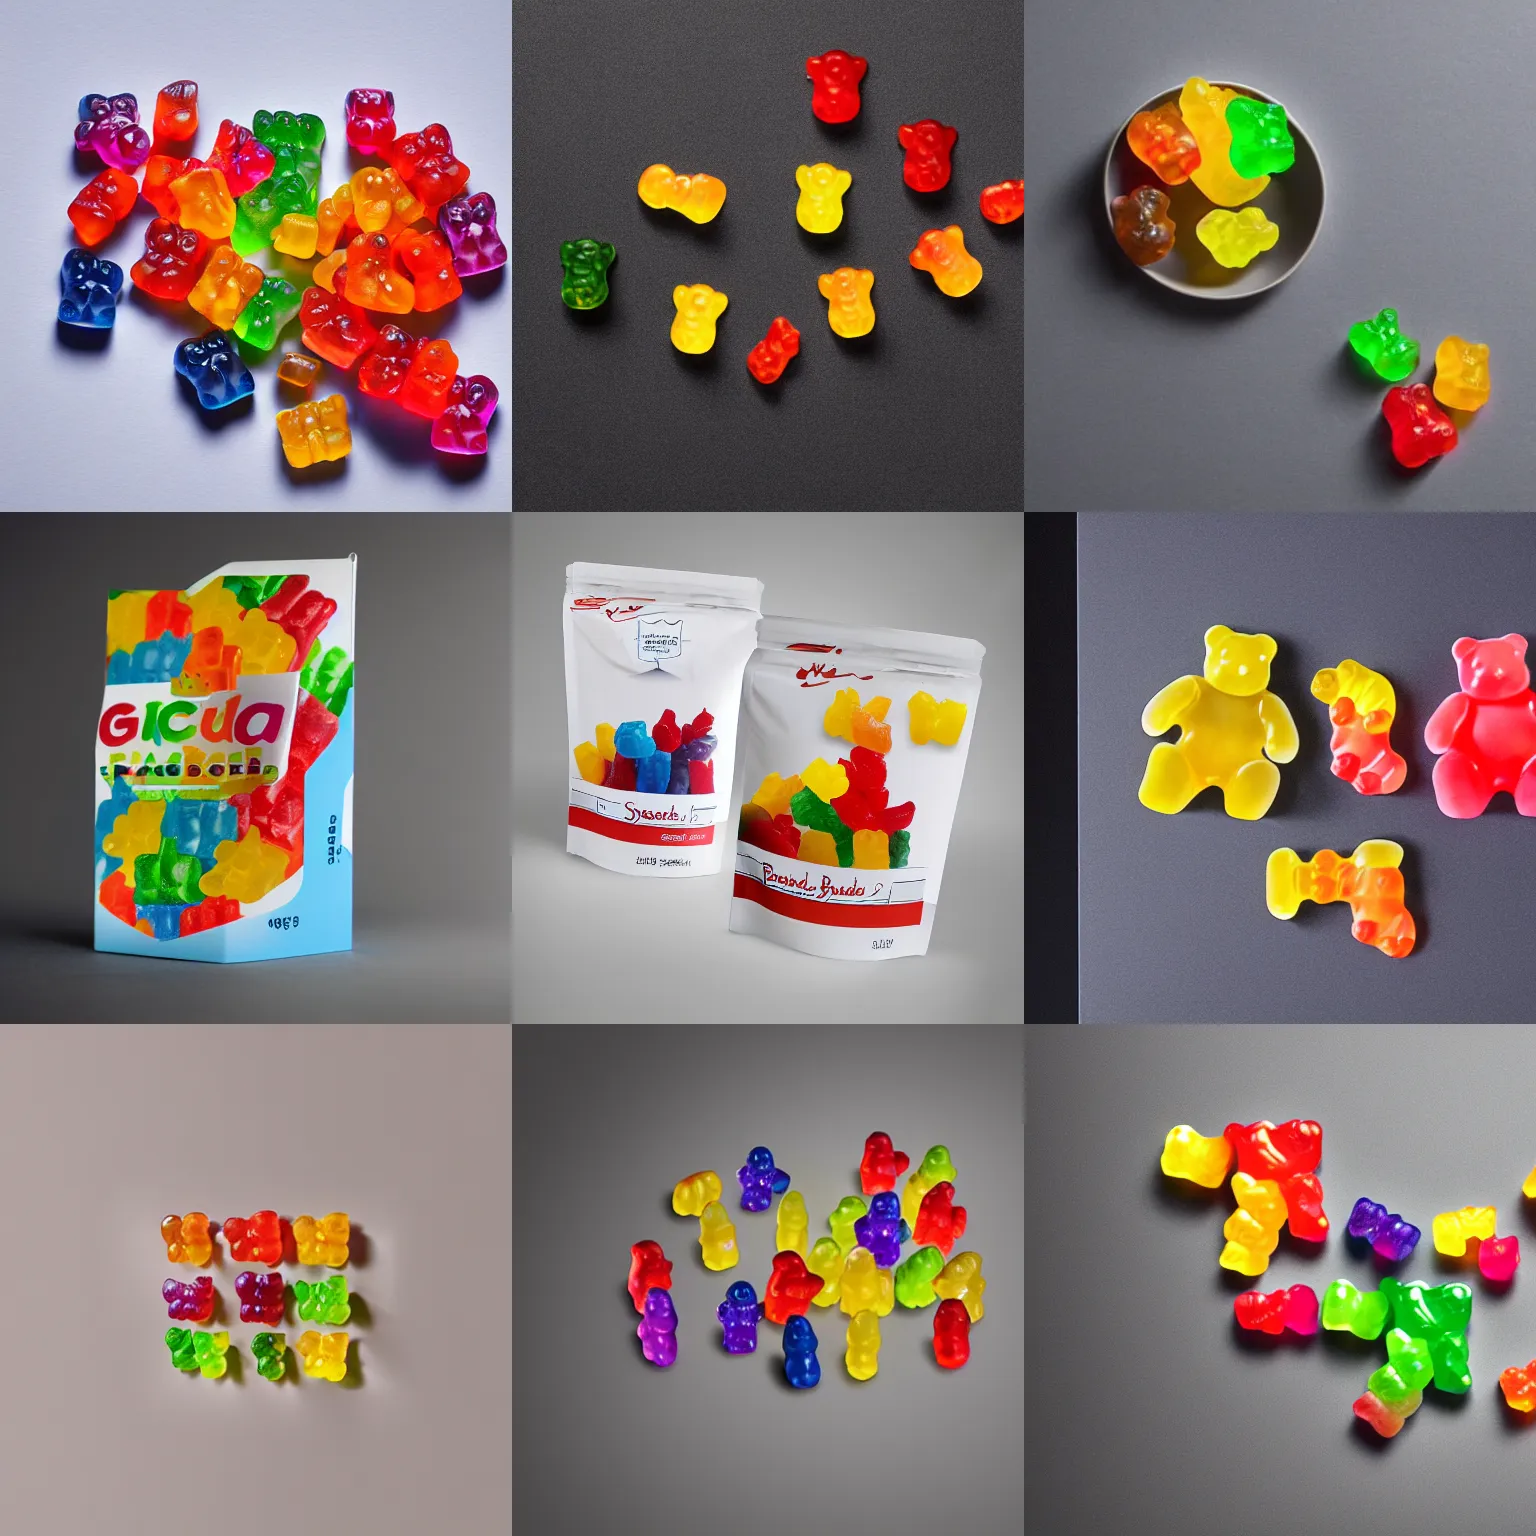 Prompt: original design concept of a packet of gummy bears, studio lighting, modern style